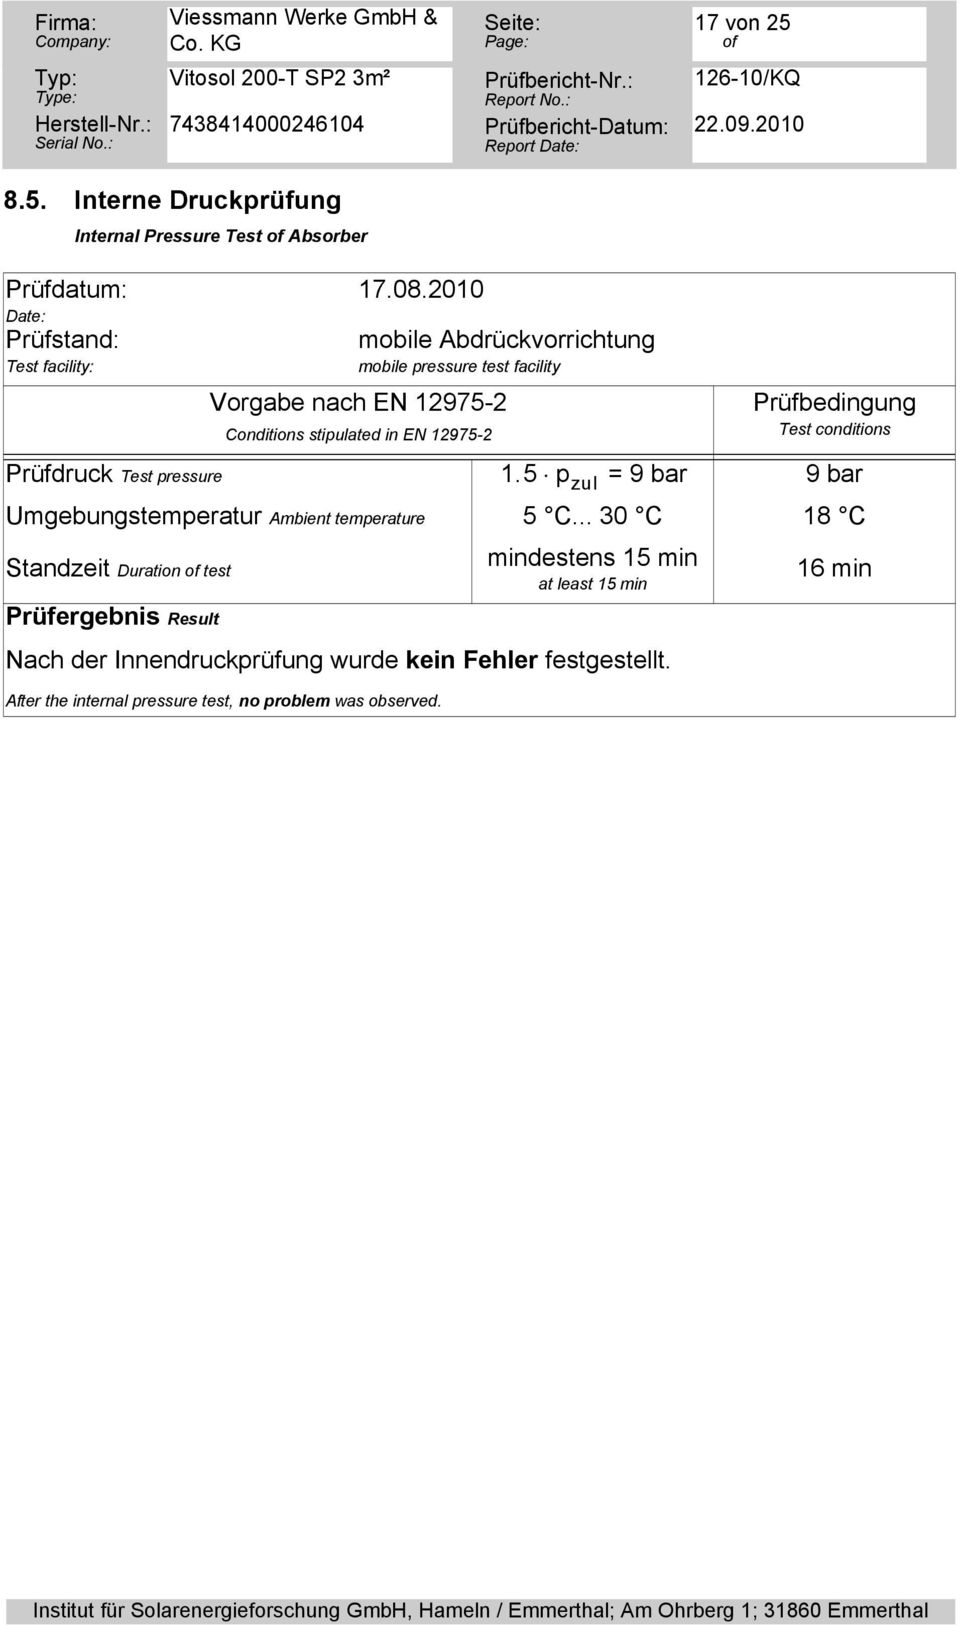 conditions Prüfdruck Test pressure 1.5 p zul = 9 bar 9 bar Umgebungstemperatur Ambient temperature 5 C.